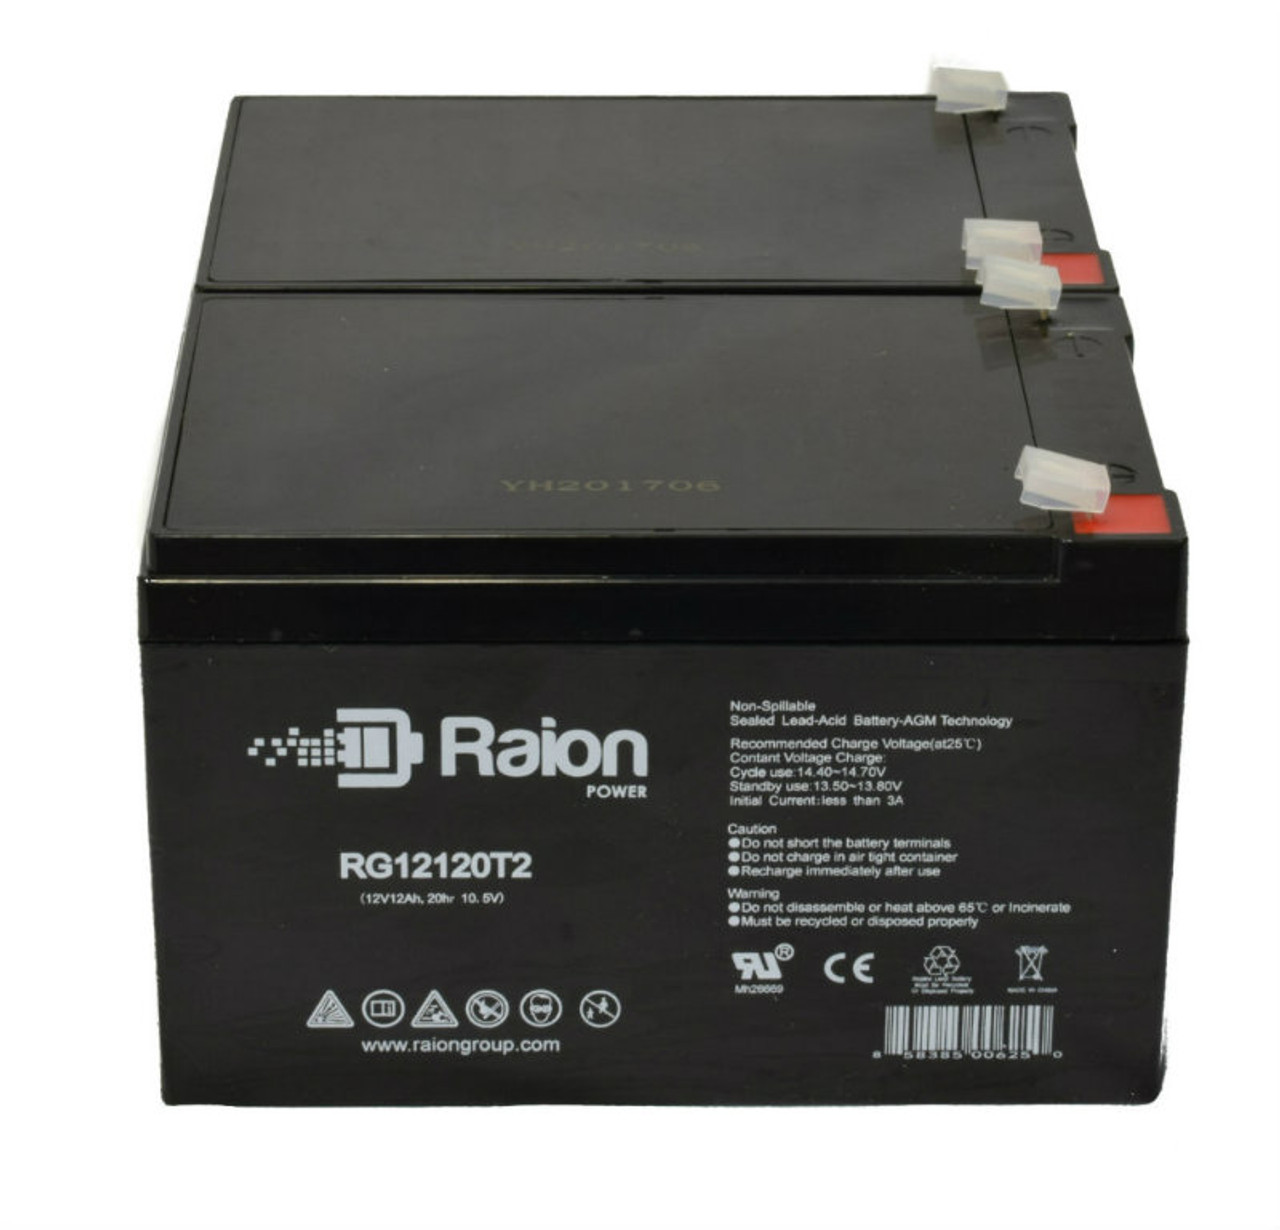 Raion Power 12V 12Ah Non-Spillable Compatible Replacement Battery for Douglas DG12-12G - (2 Pack)